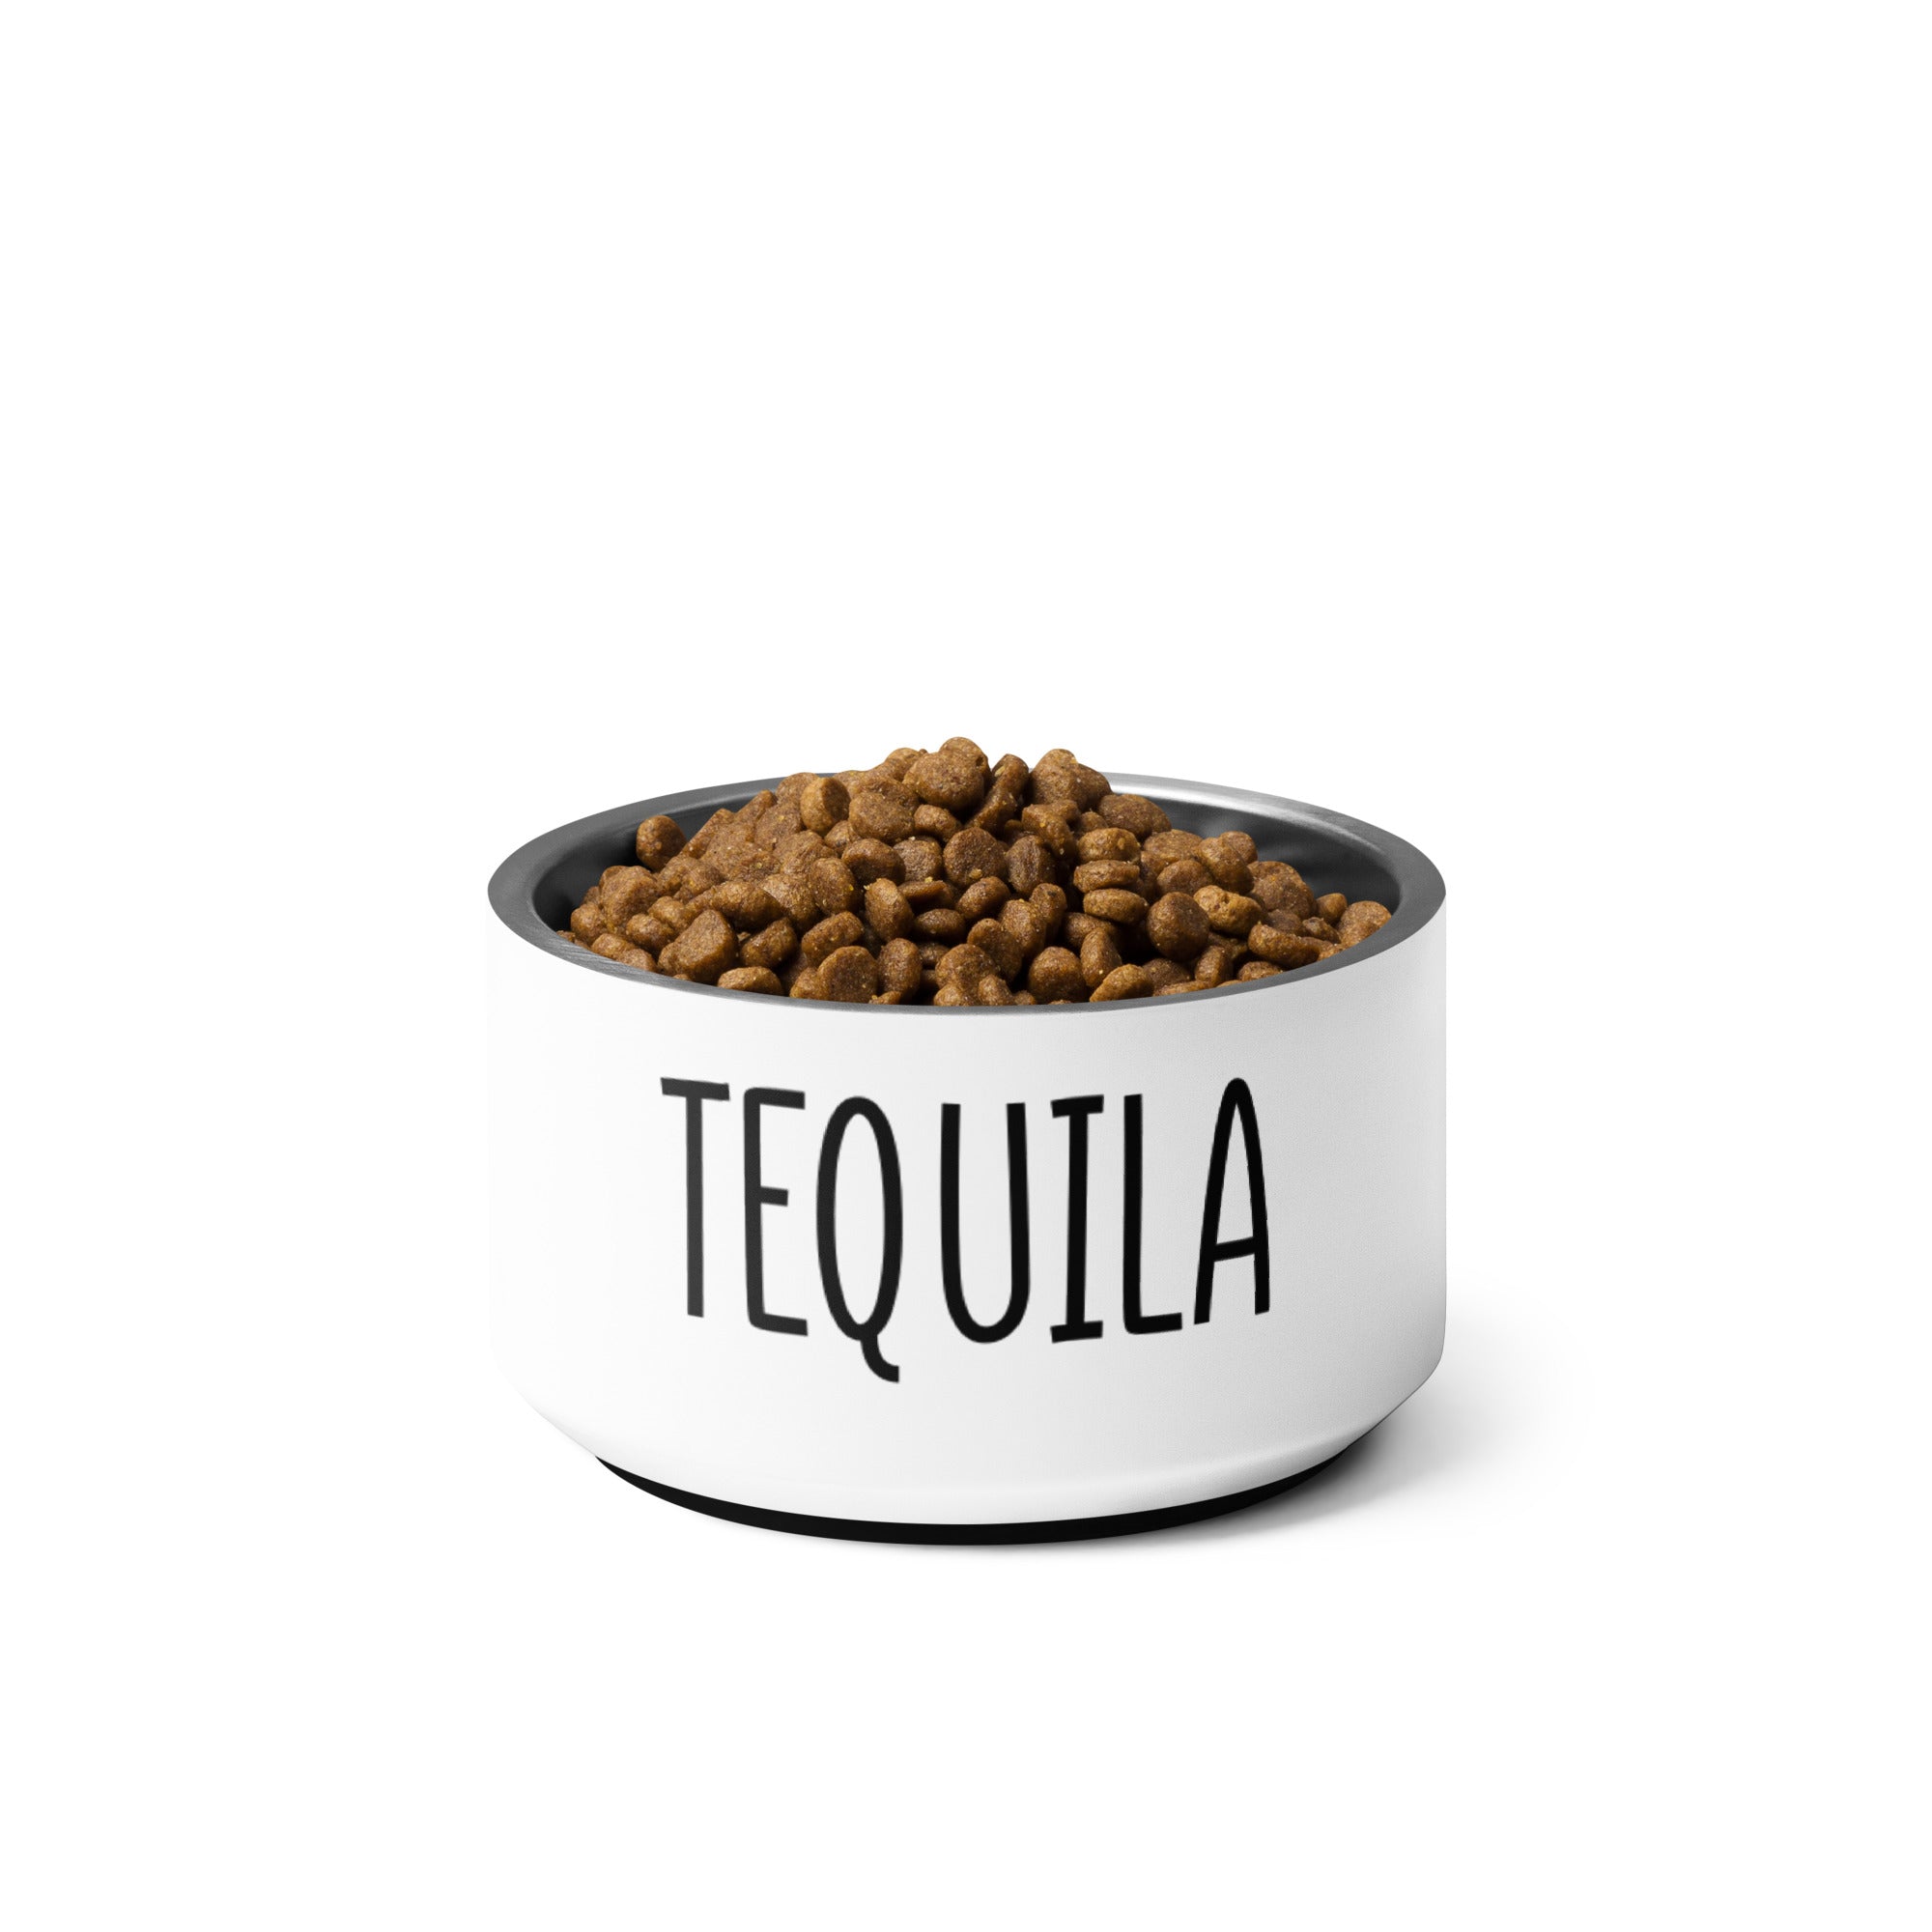 Tacos & Tequila Cat Food Bowls